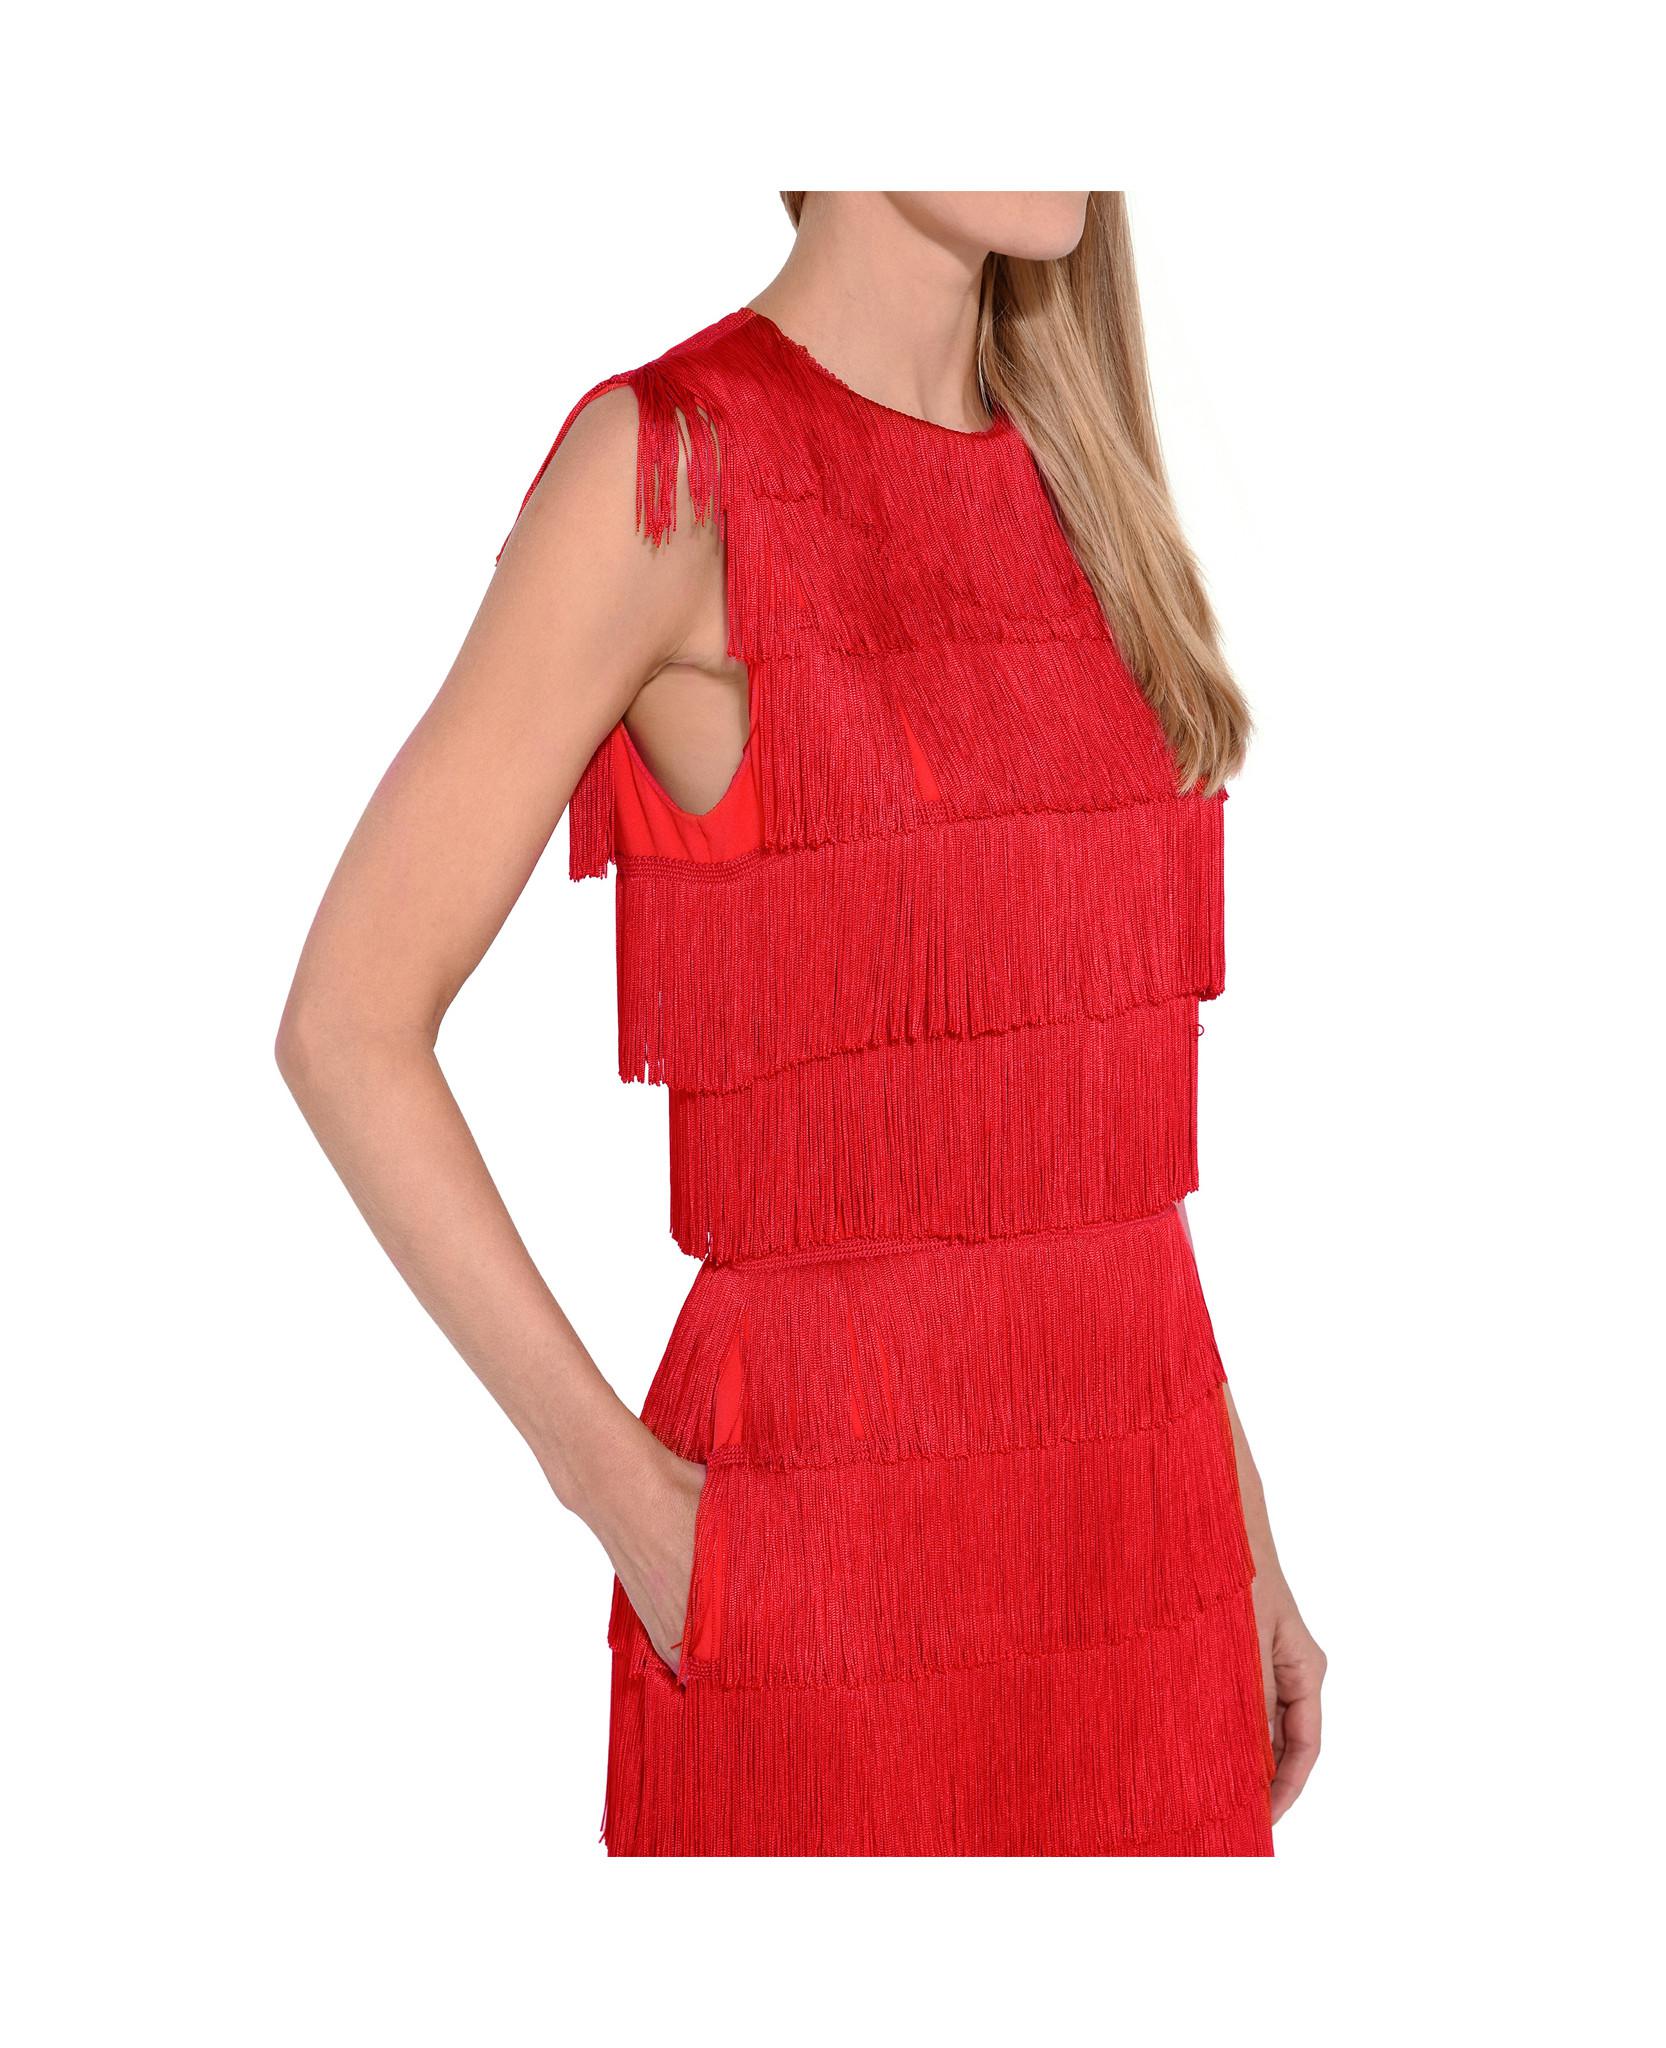 stella mccartney red fringe dress